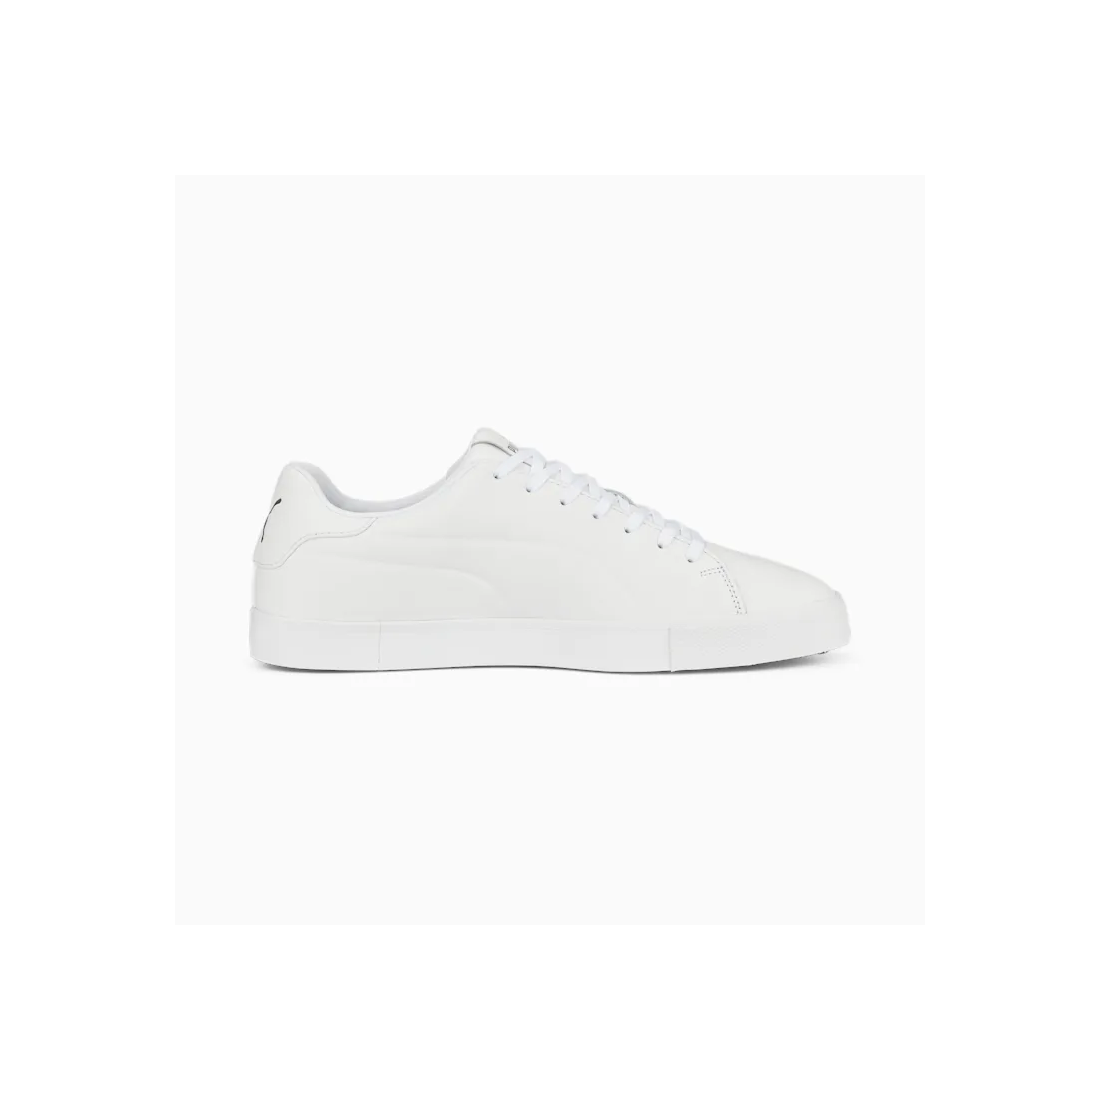 Puma chaussures Fusion Classic white